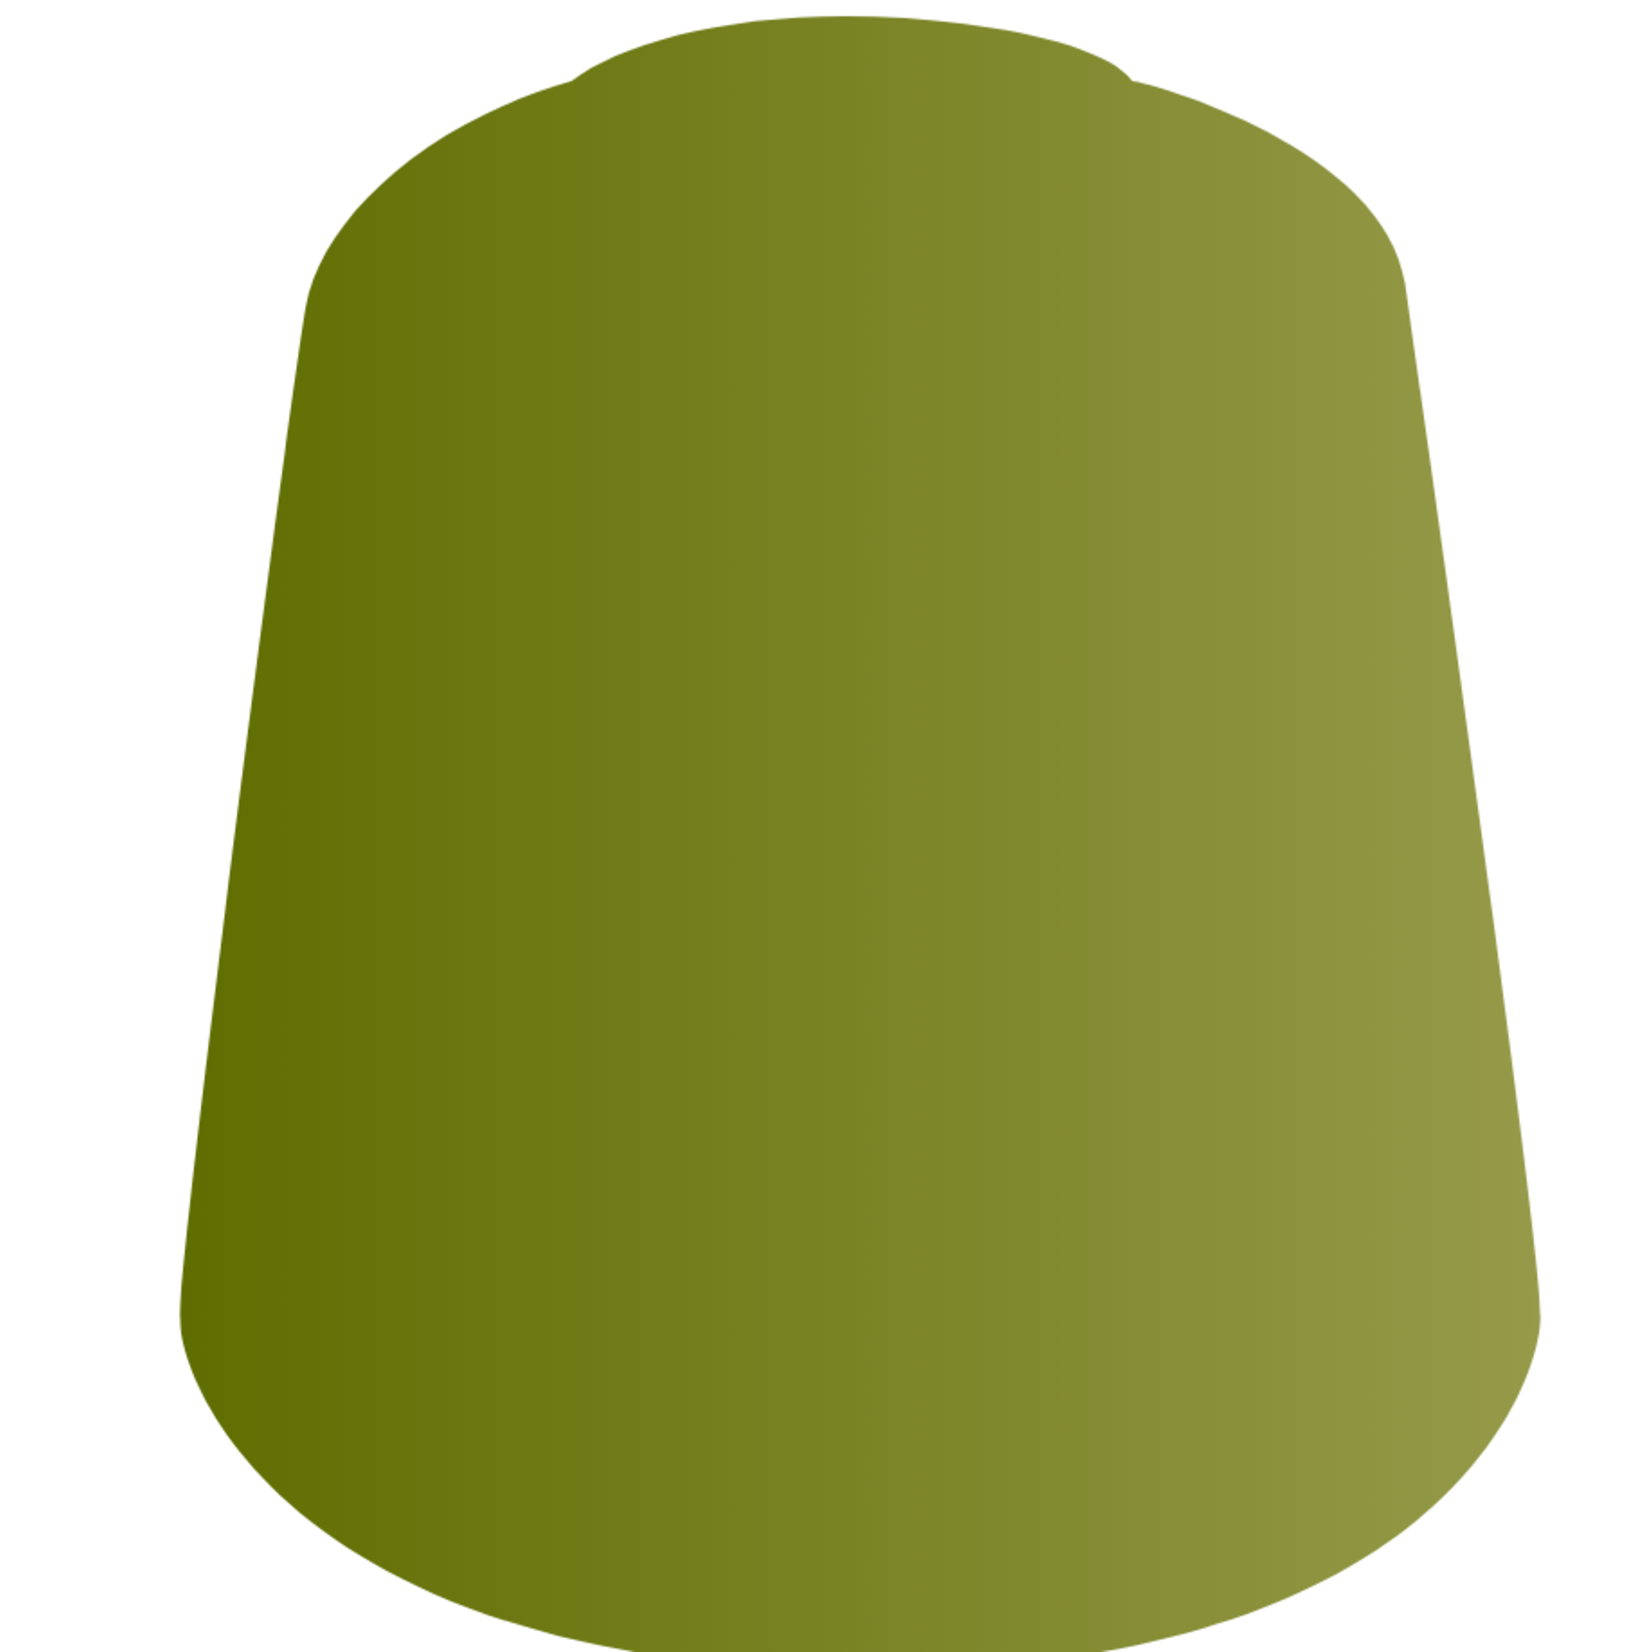 Citadel Militarum Green (Contrast 18ml)